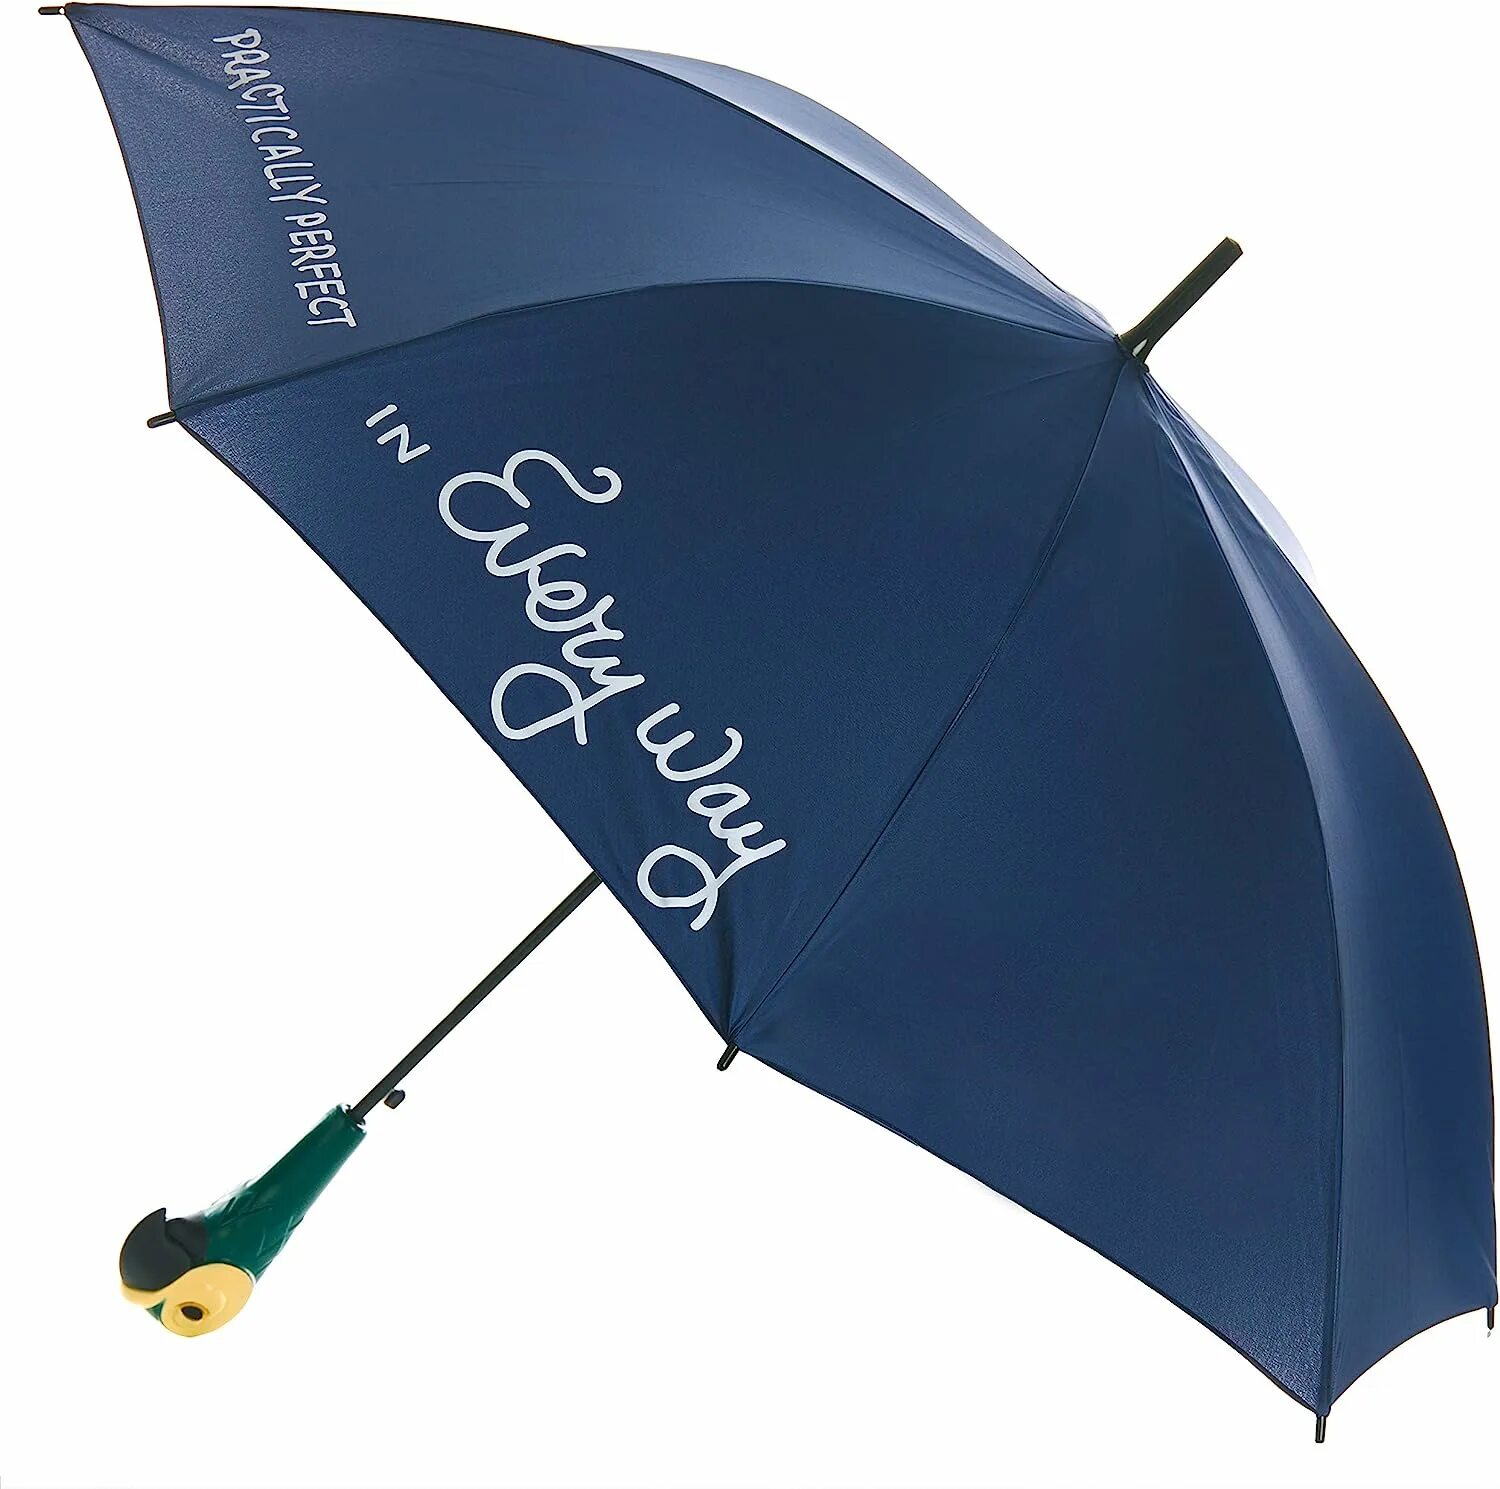 Зонтик поппинс. Зонт Mary Poppins. Mary Poppins Umbrella.